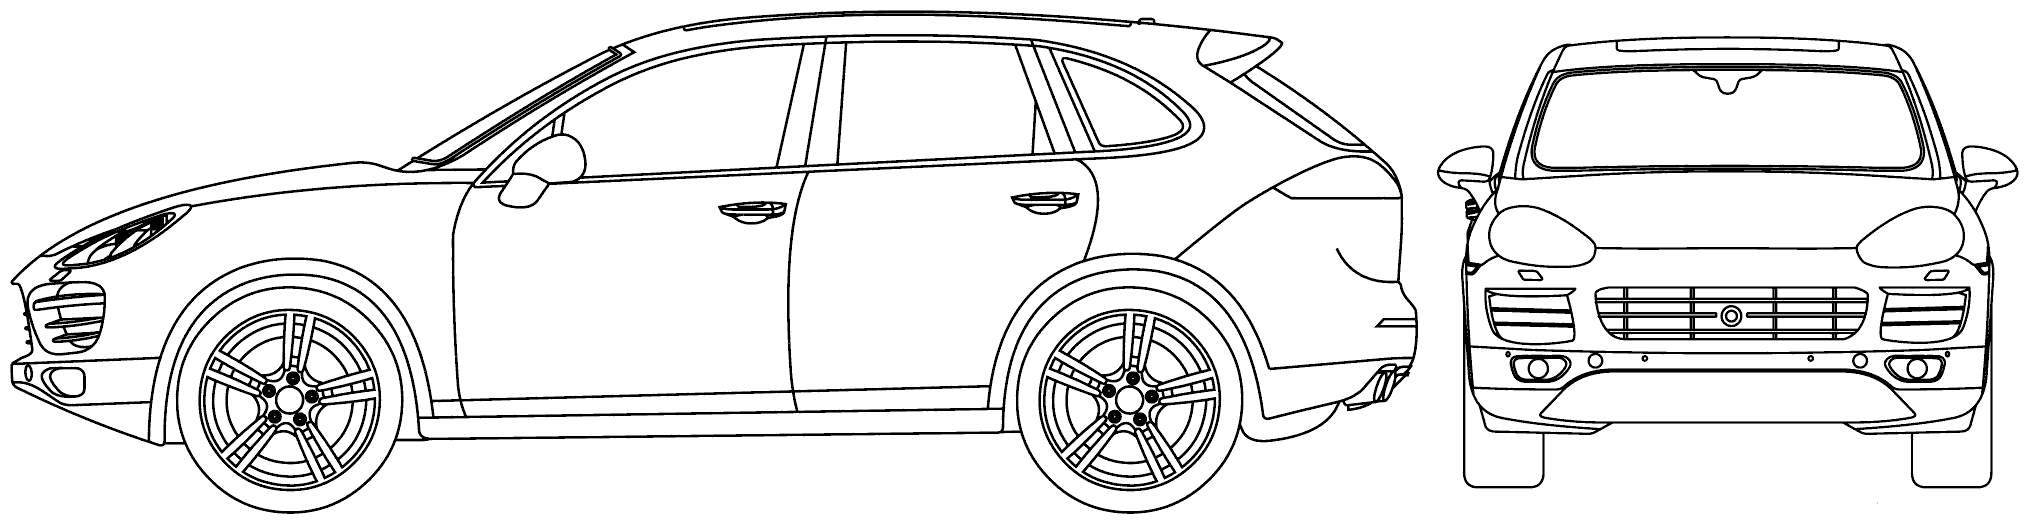 Porsche Cayenne S blueprint